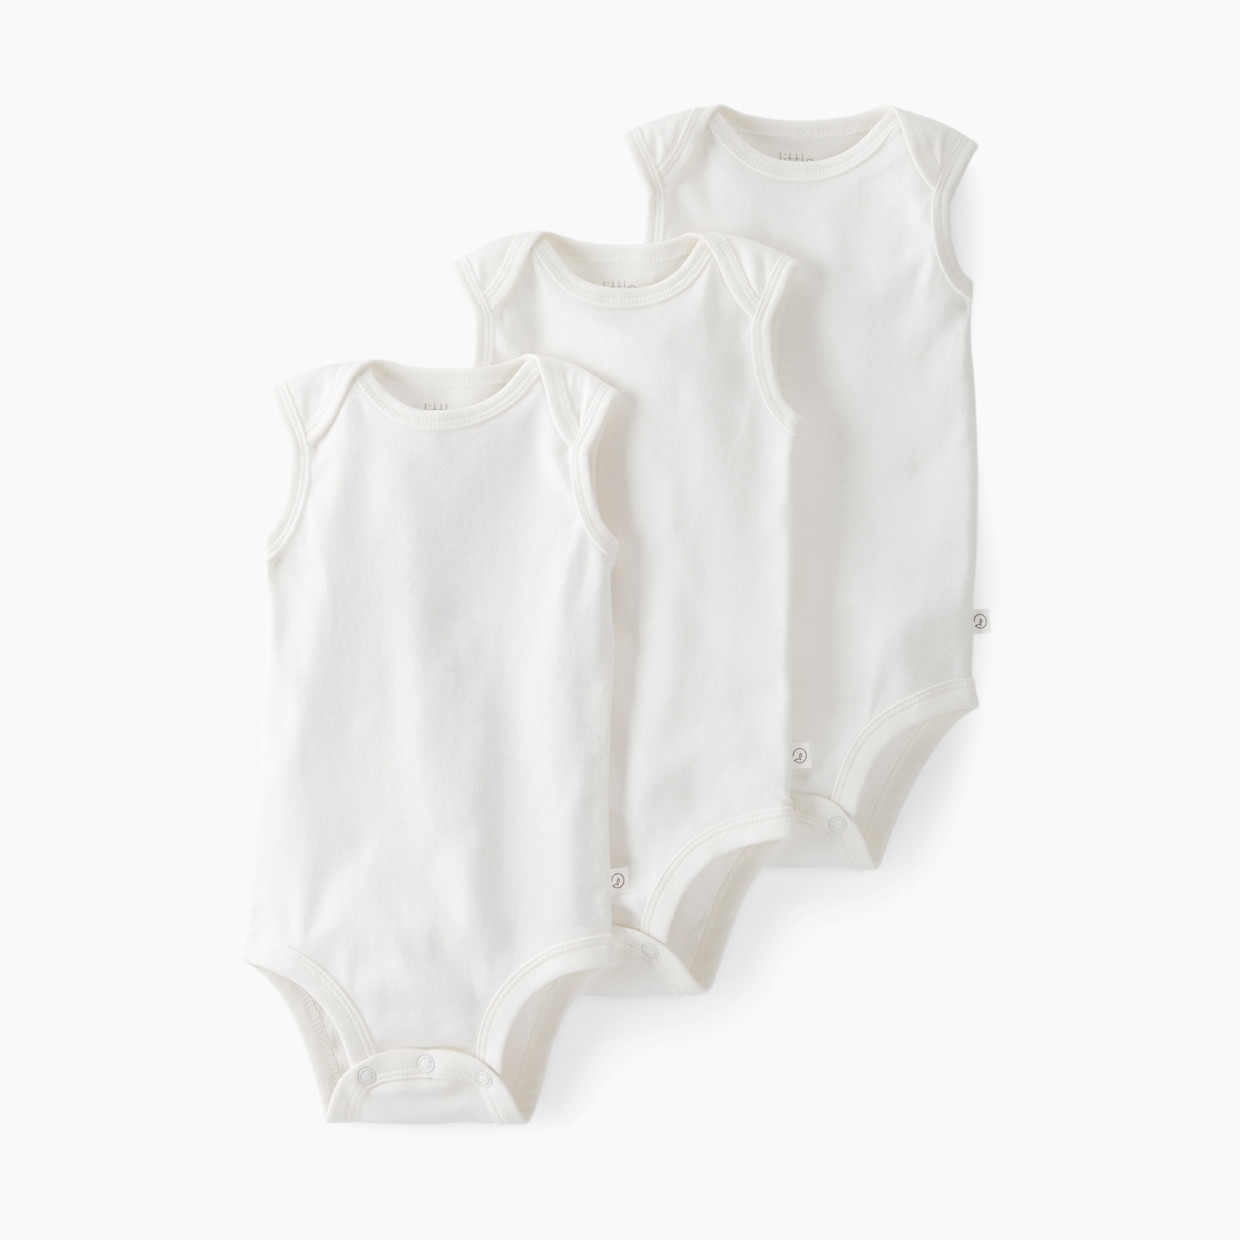 Carter's Little Planet Organic Cotton Rib Bodysuits (3 Pack) - Light Cream, 3 M.